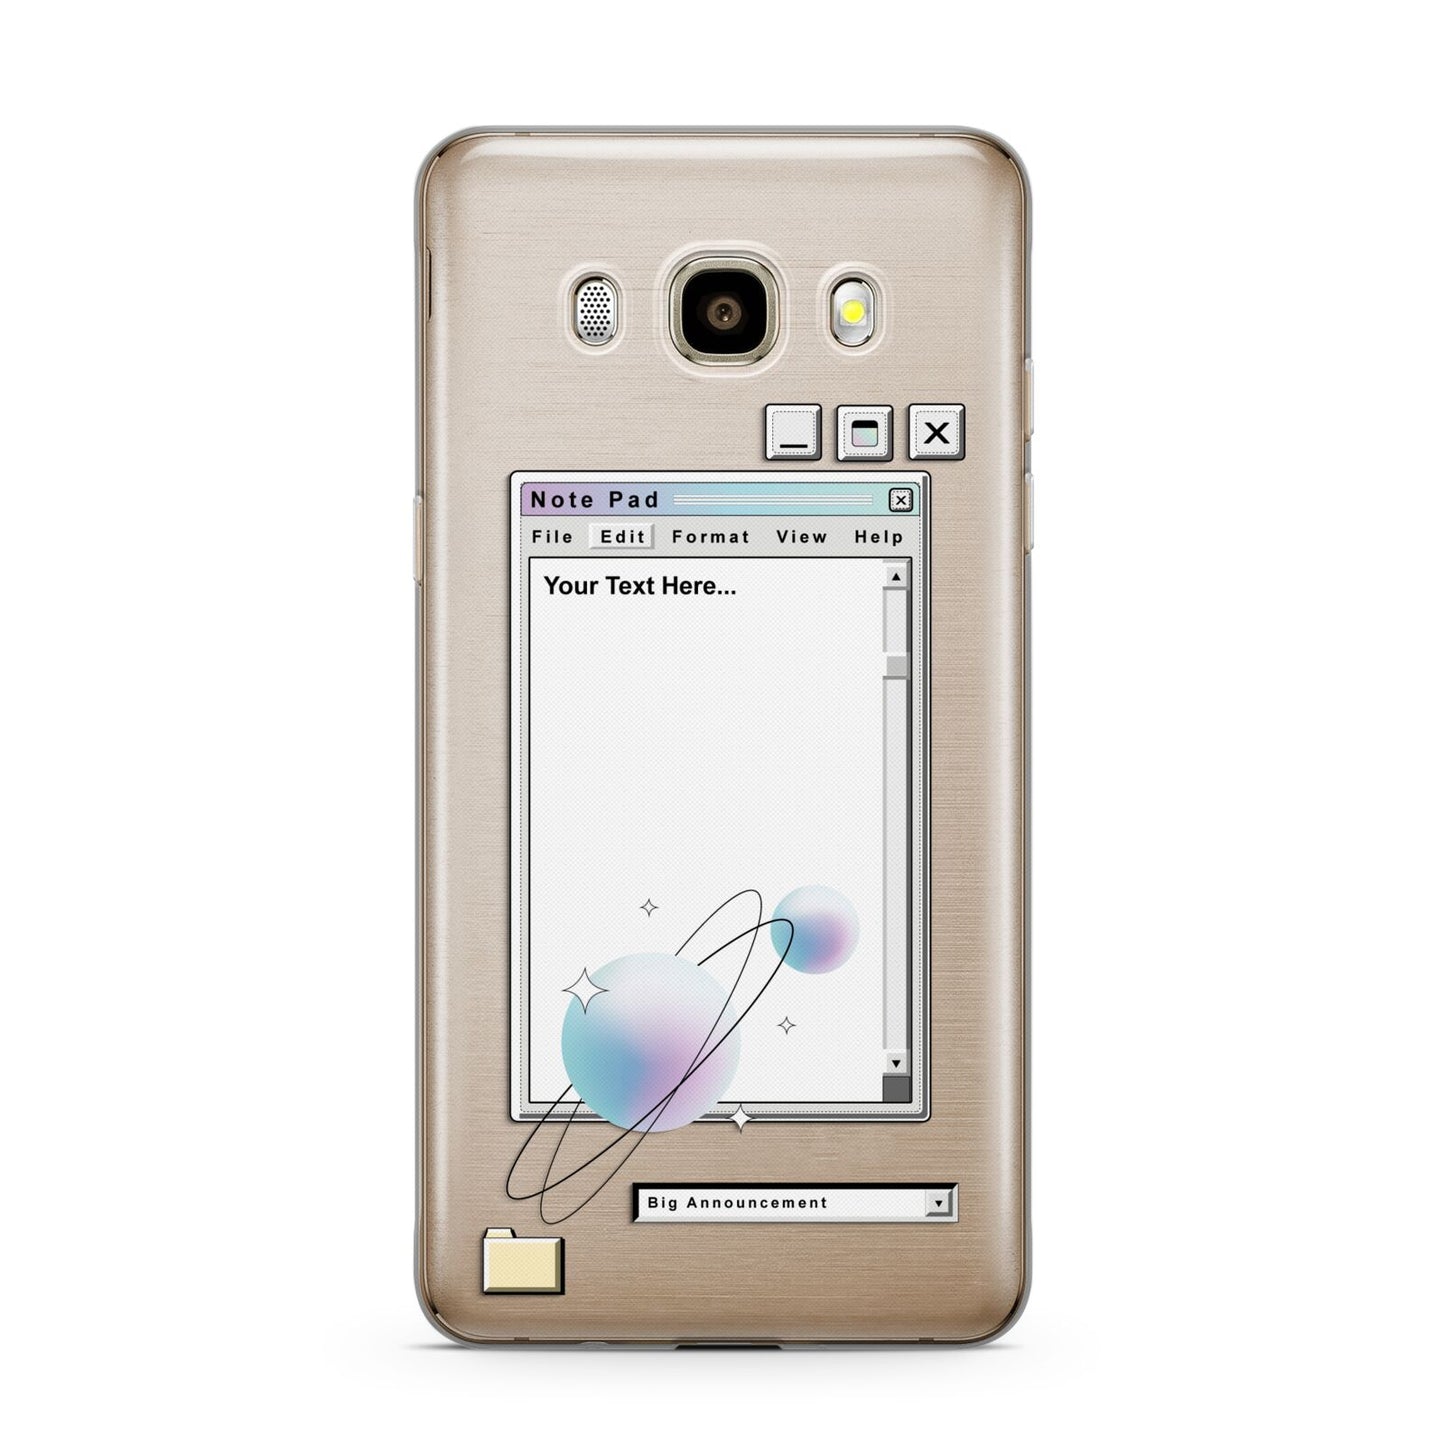 Retro Note Pad Samsung Galaxy J7 2016 Case on gold phone